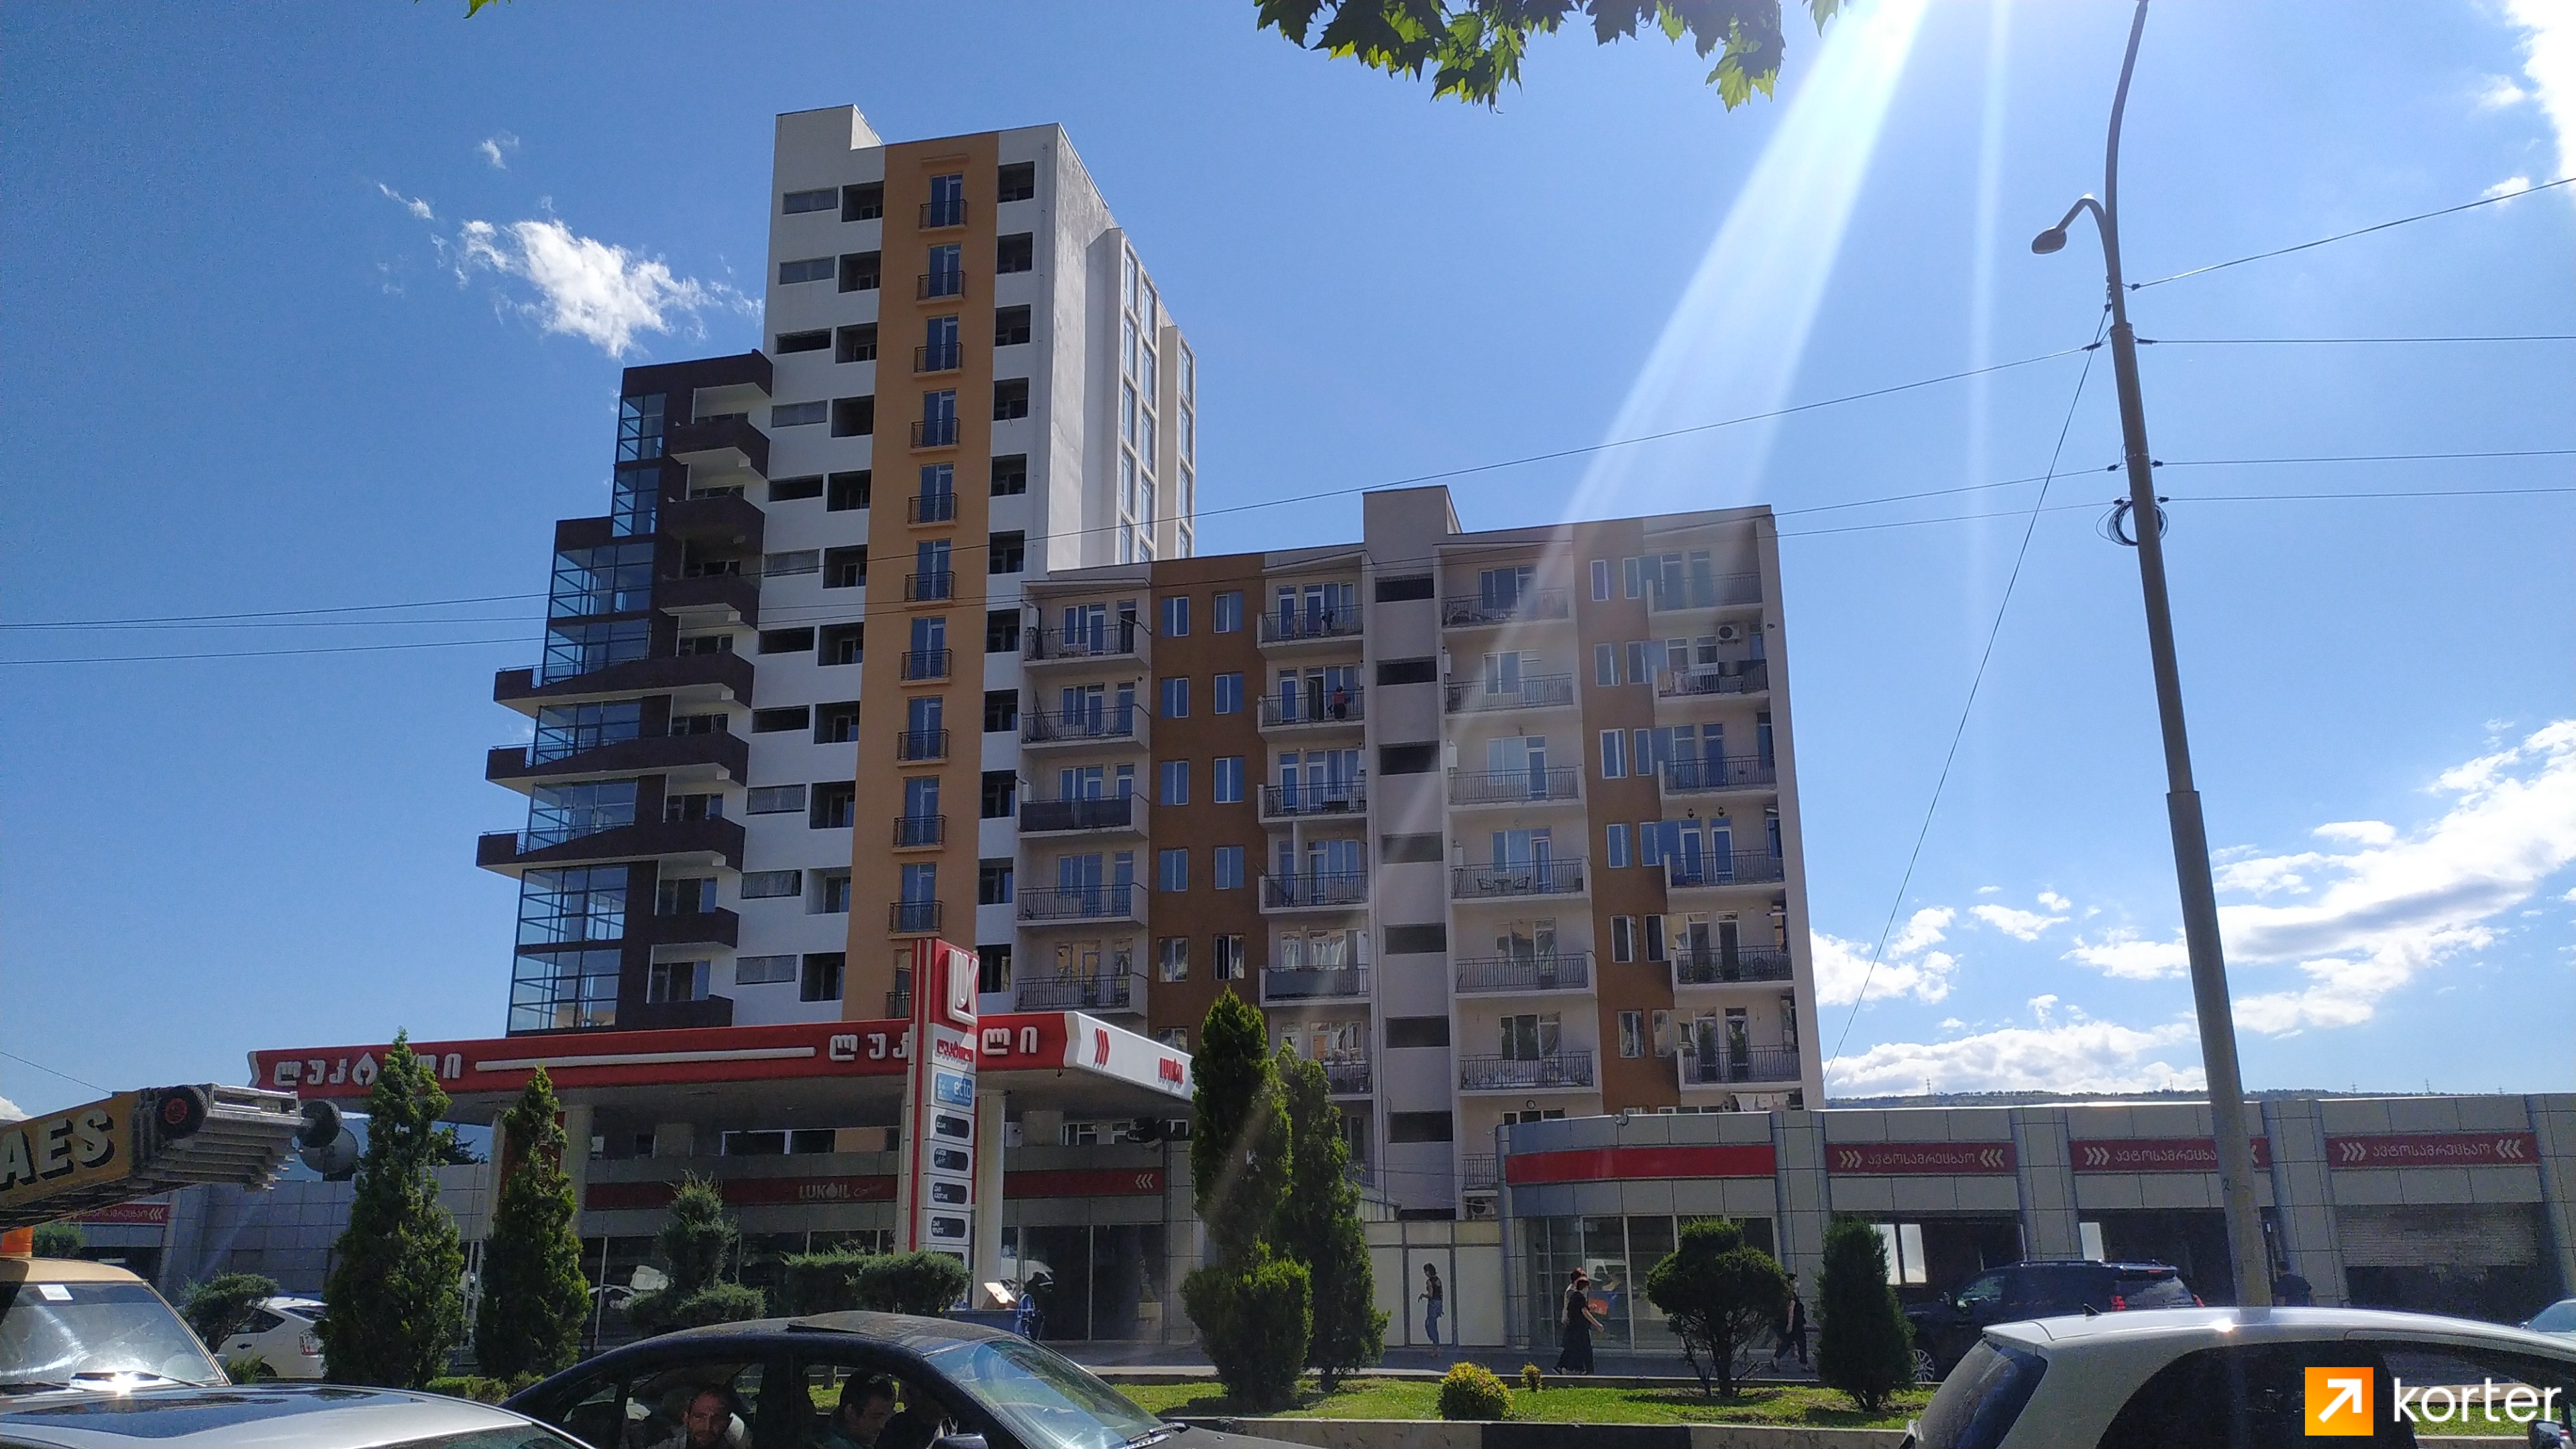 Construction progress Guramishvili Residence - Angle 1, June 2021